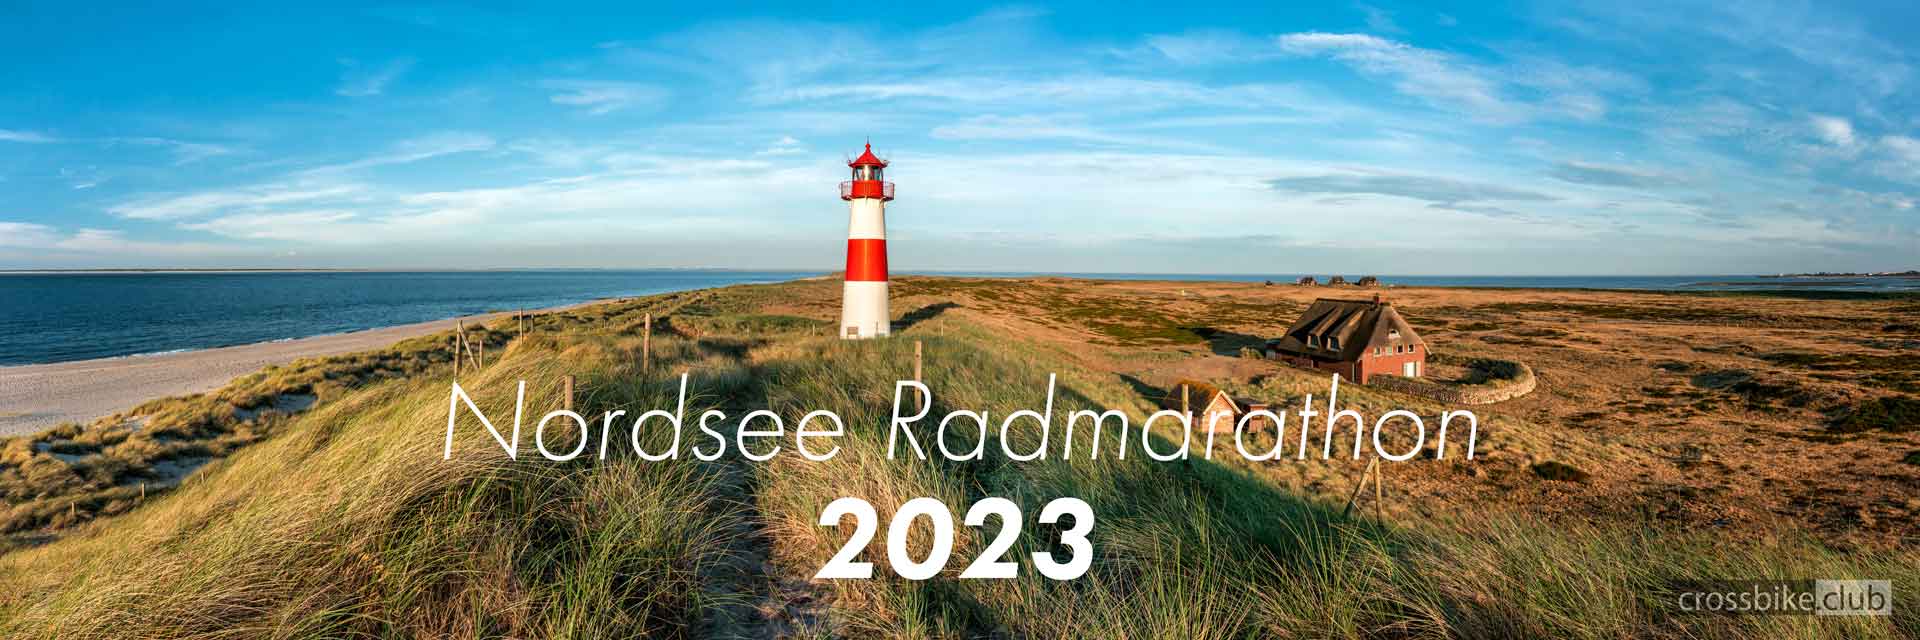 Nordsee Radmarathon 2023